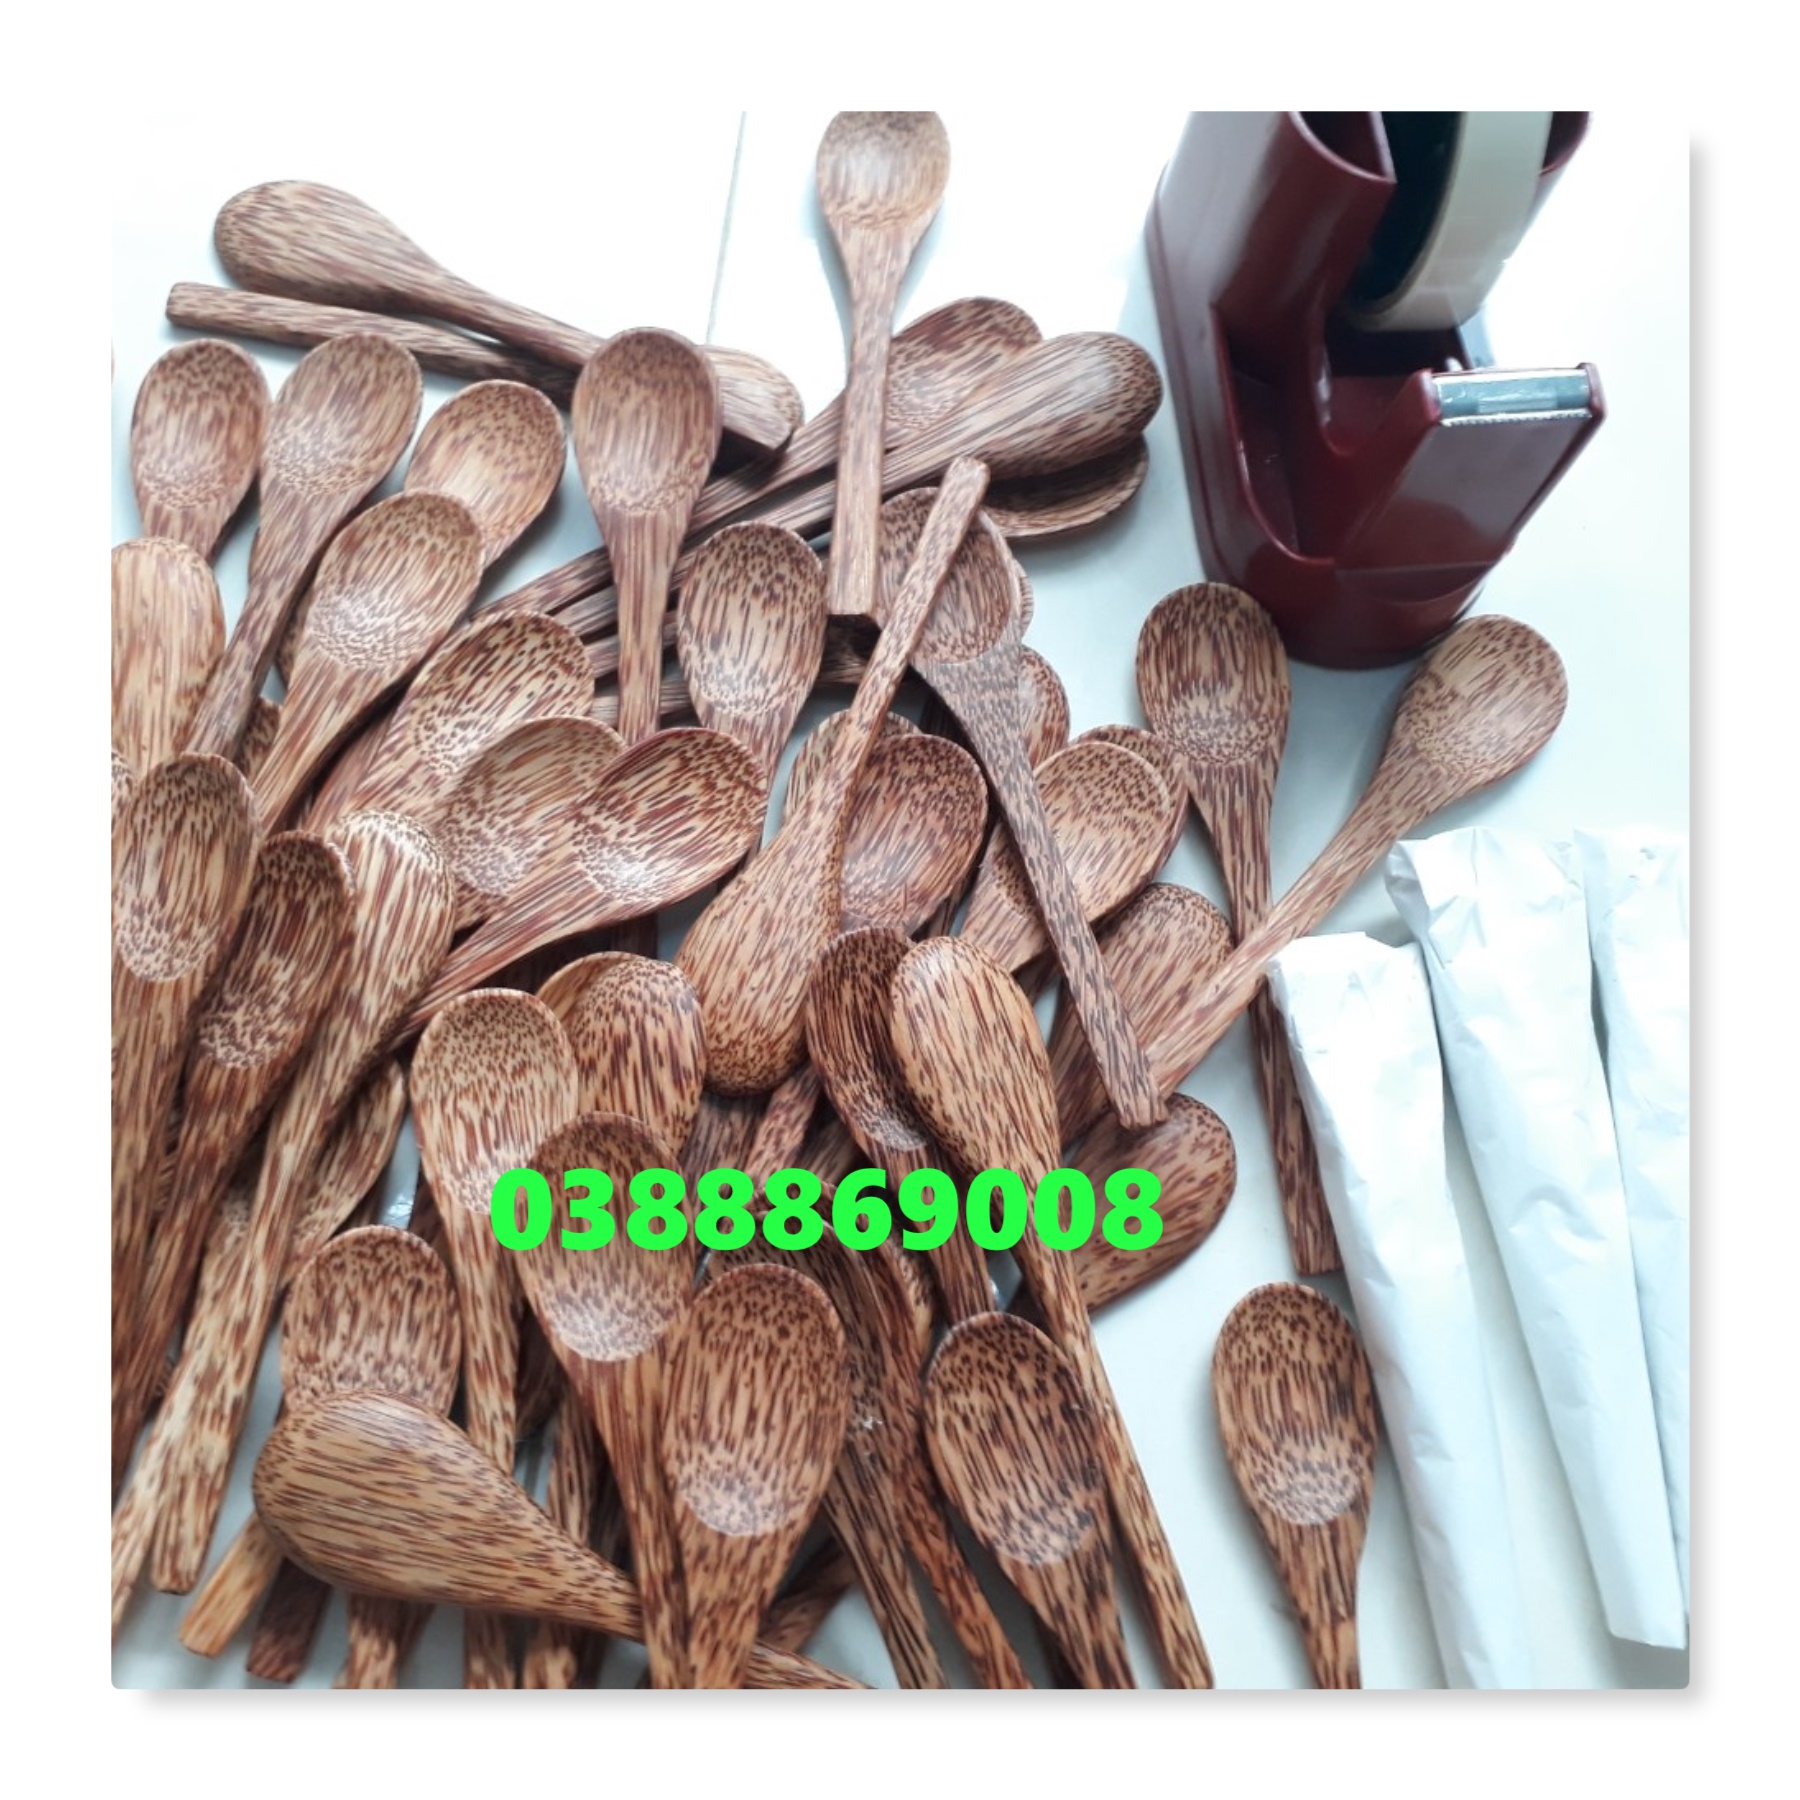 Muỗng thìa gỗ dừa 16cm xuất khẩu